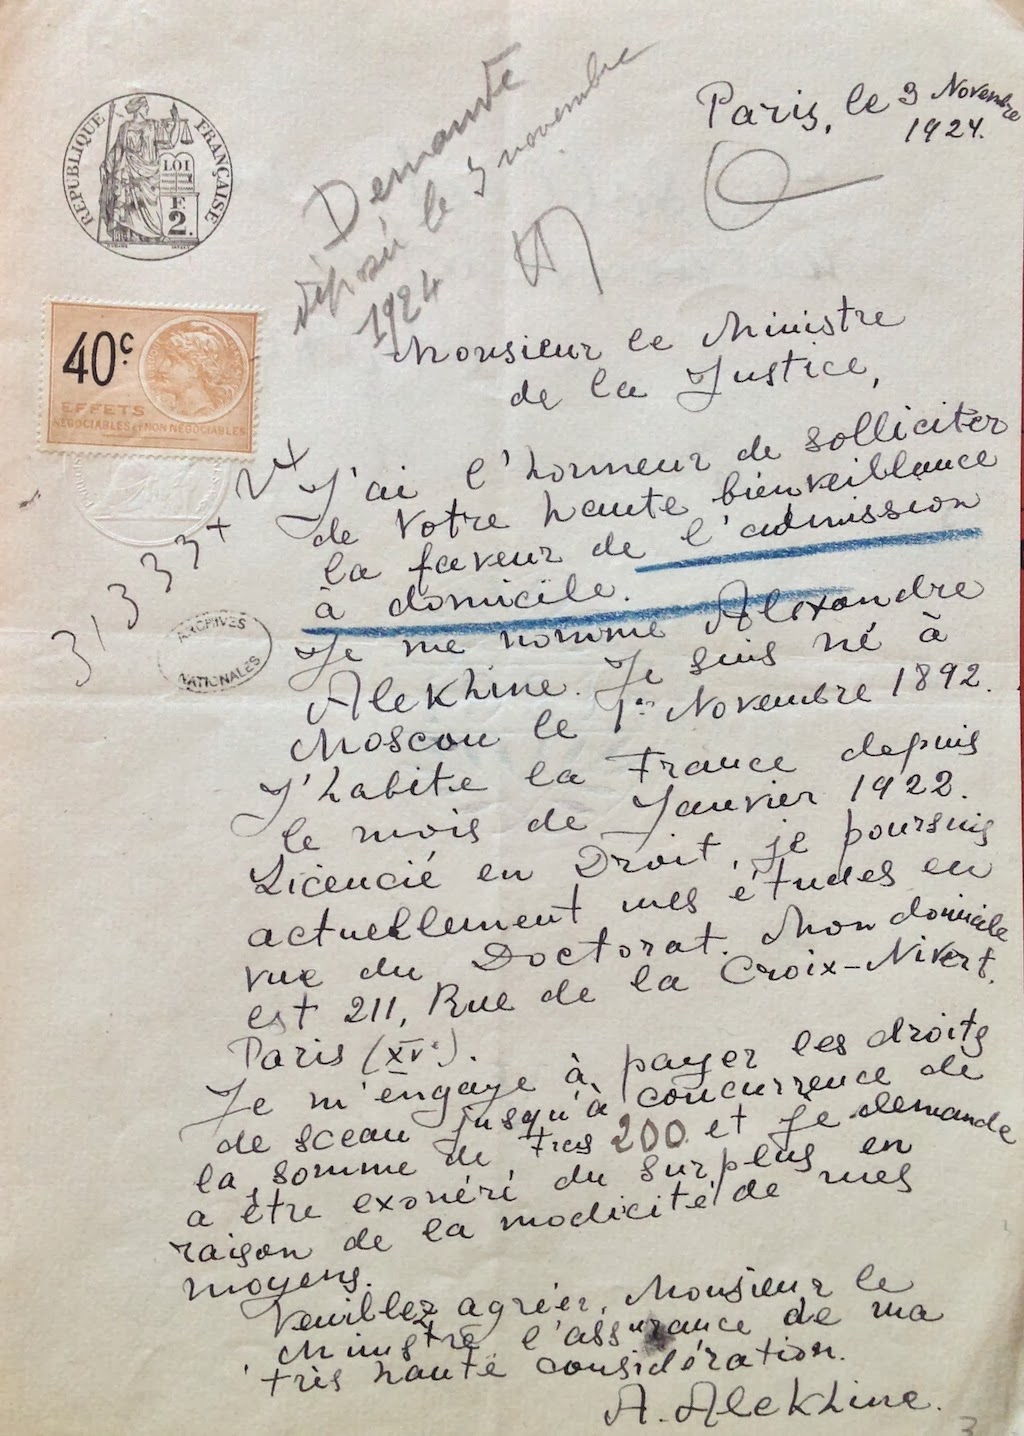 Chess autograph Capablanca - Alekhine 1927 Buenos Aires - Listing